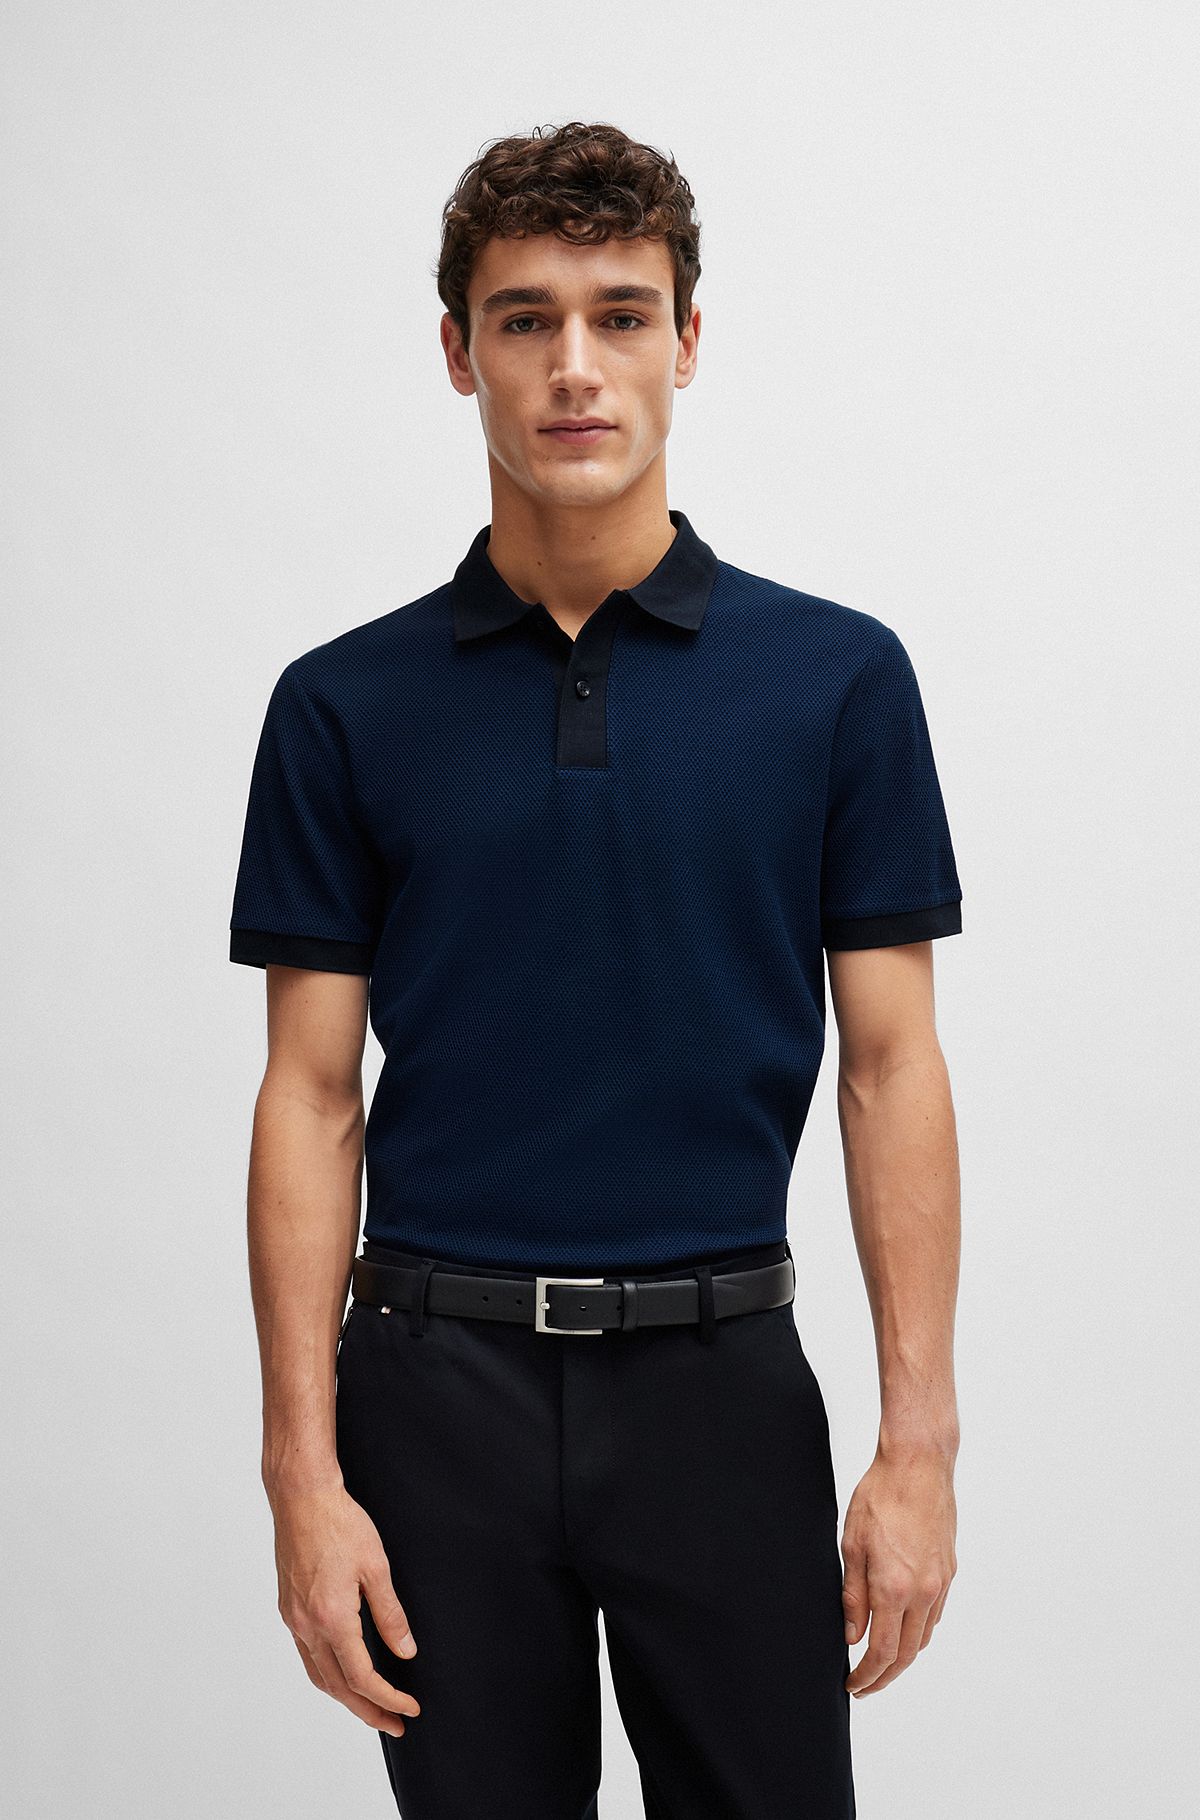 Buy the Mens Blue Spread Collar Short Sleeve Golf Polo Shirt Size 3XB